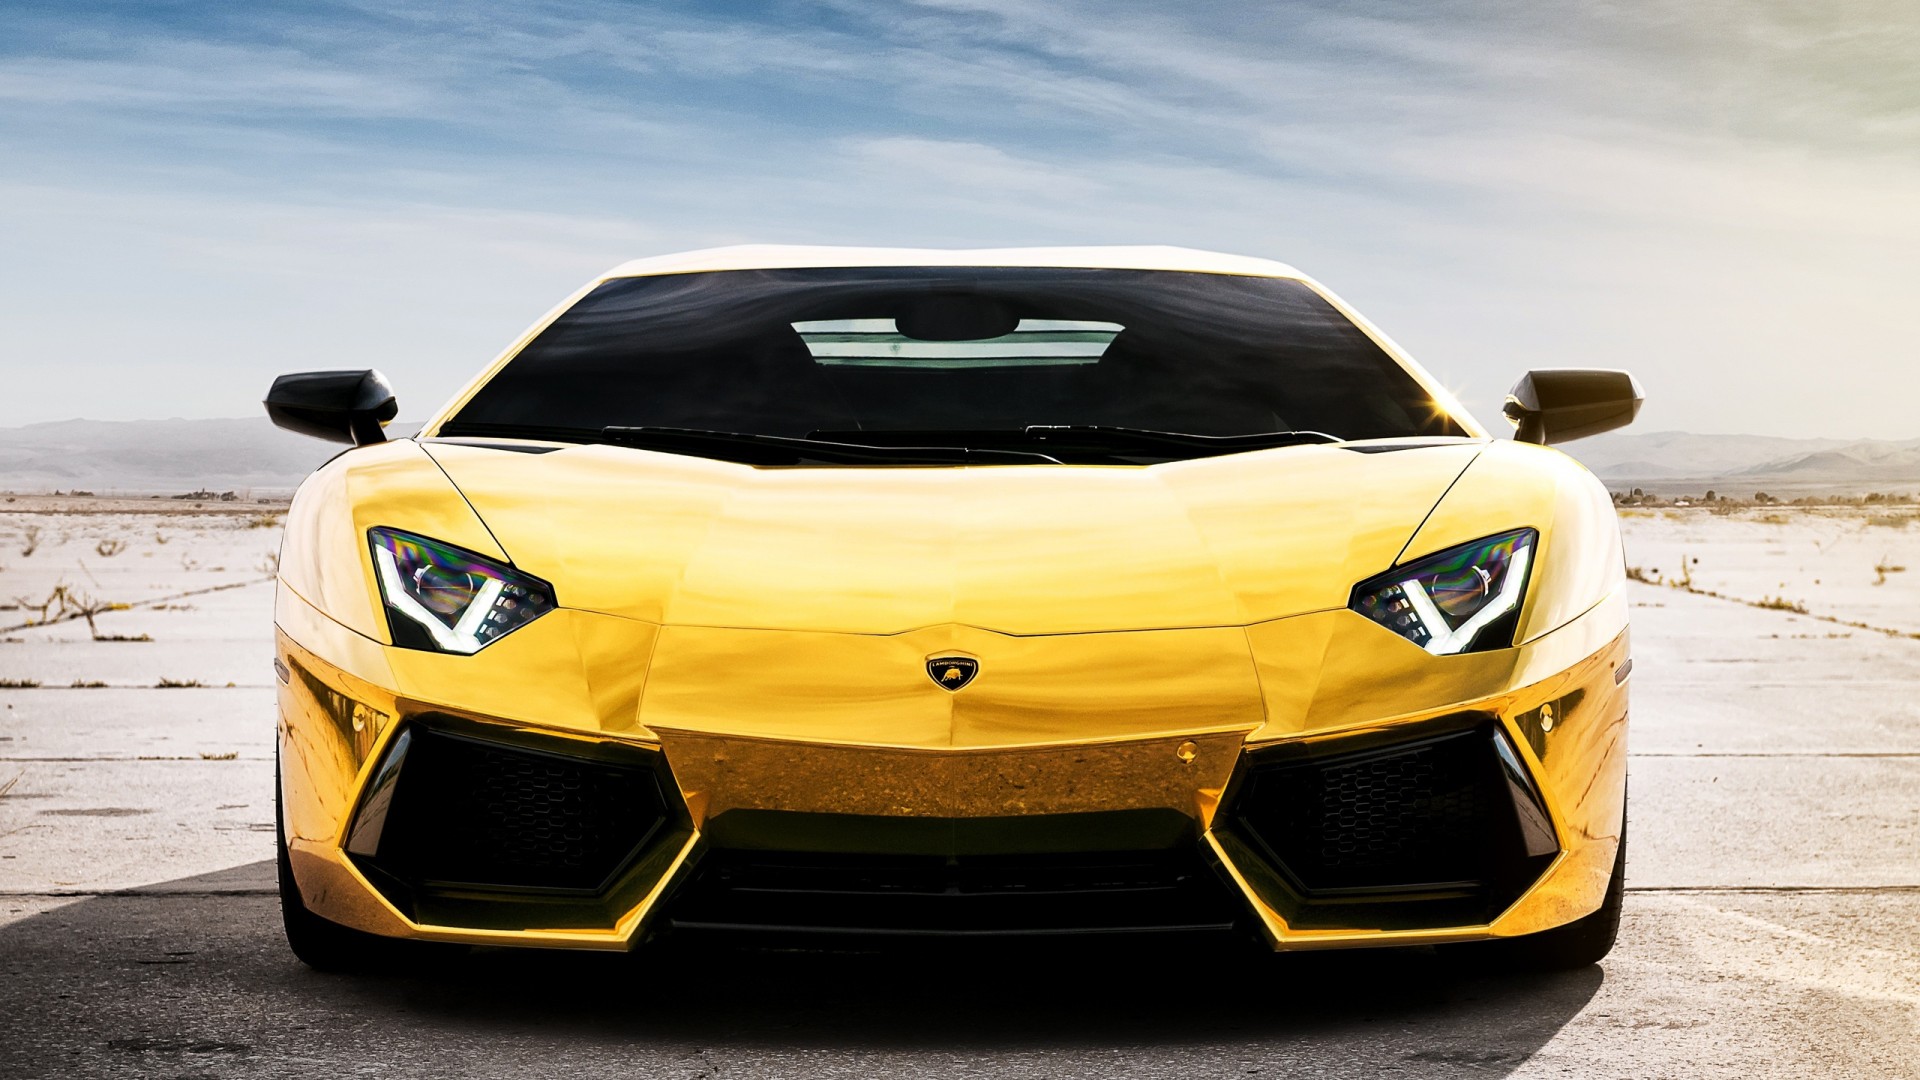 Lamborghini Aventador Wallpapers High Quality | Download Free